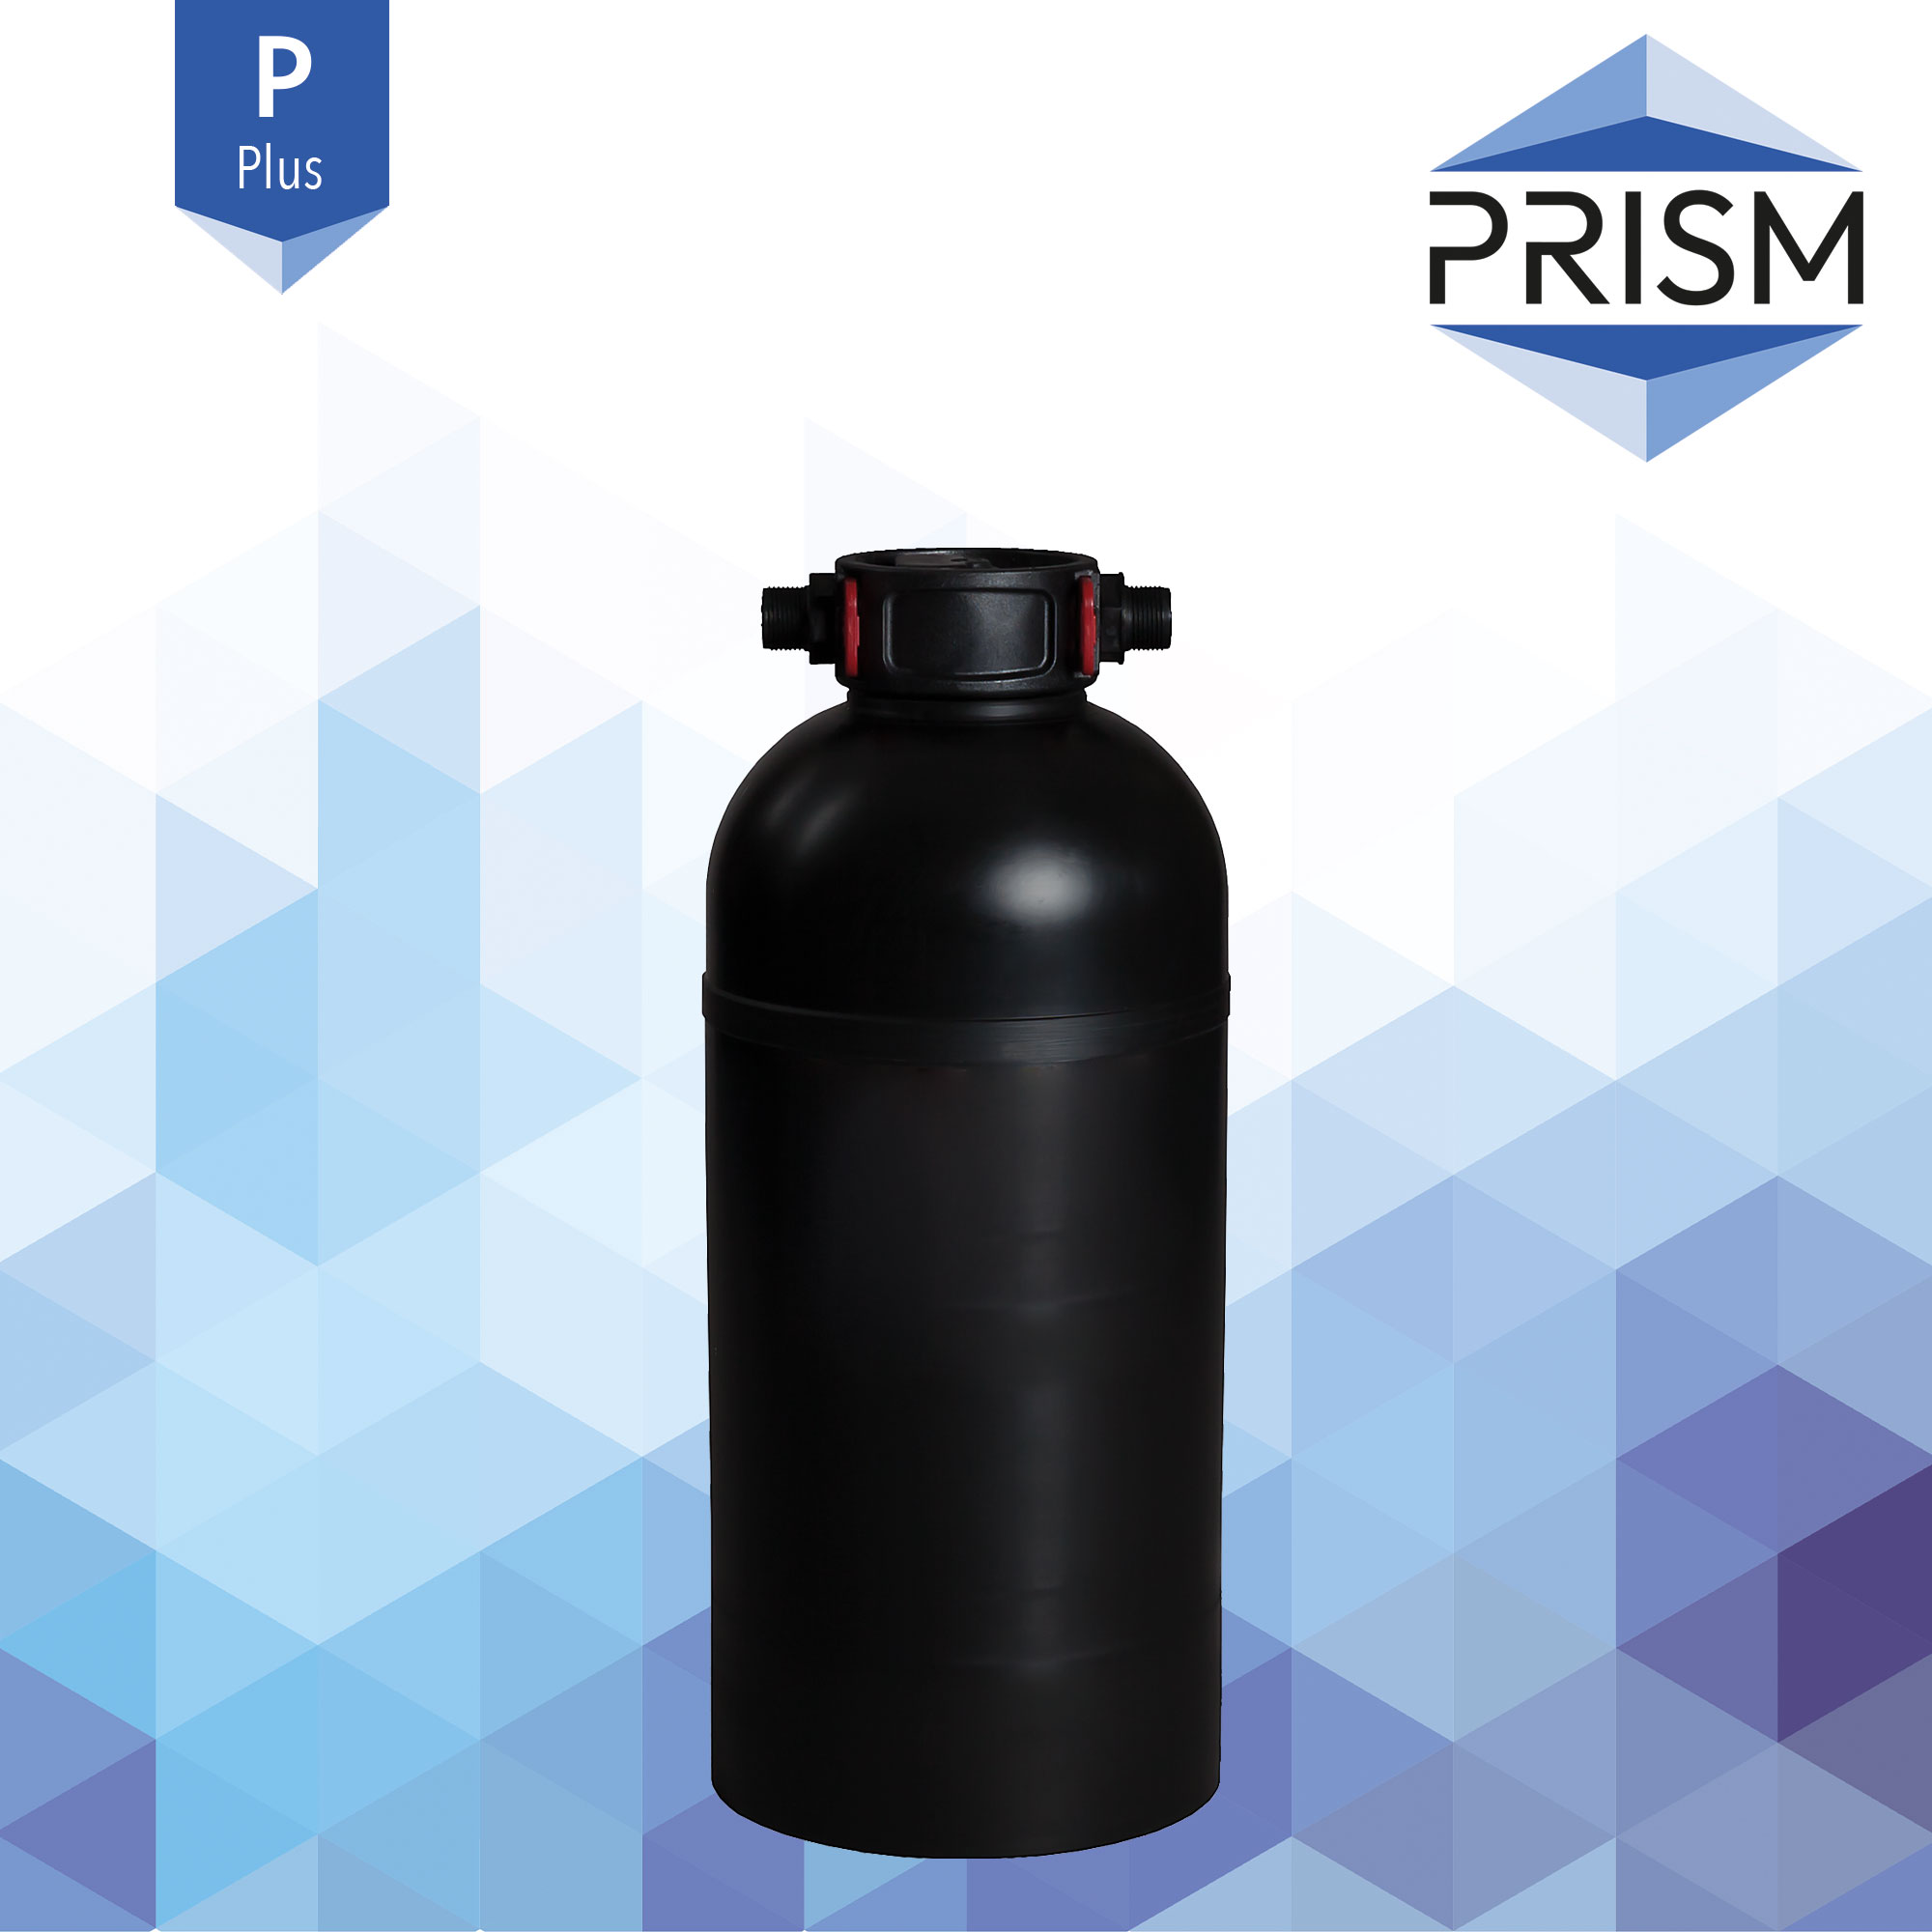 PV-PP-8x17-3/4-P    PRISM PLUS RANGE :  High Yield Polypropylene Pressure Vessel  8